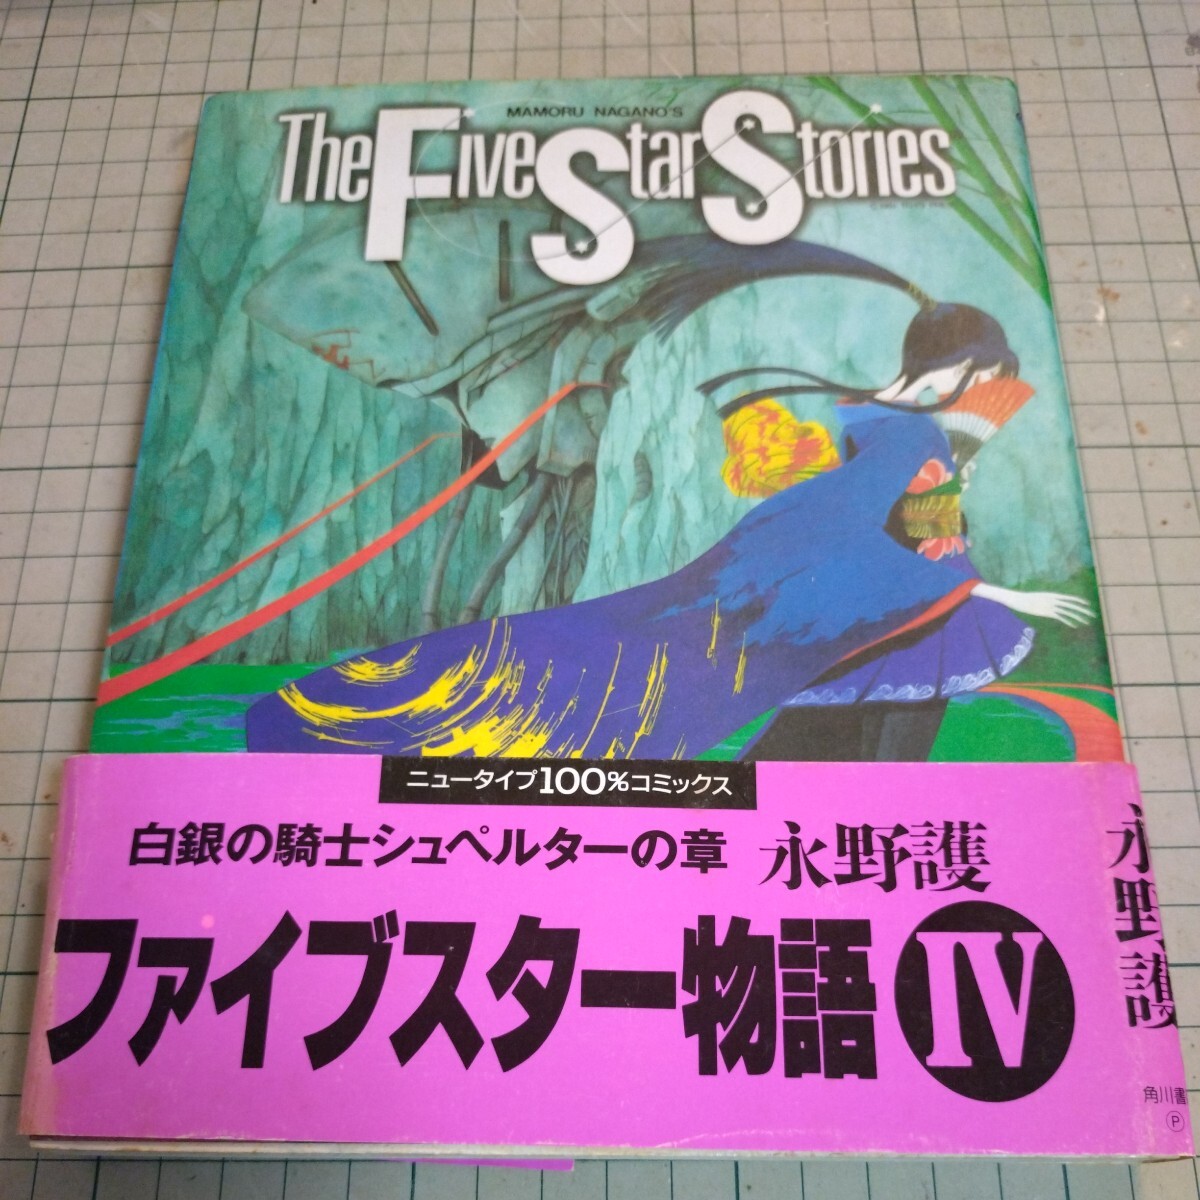  comics [ The Five Star Stories ] no. 4 volume ... work 